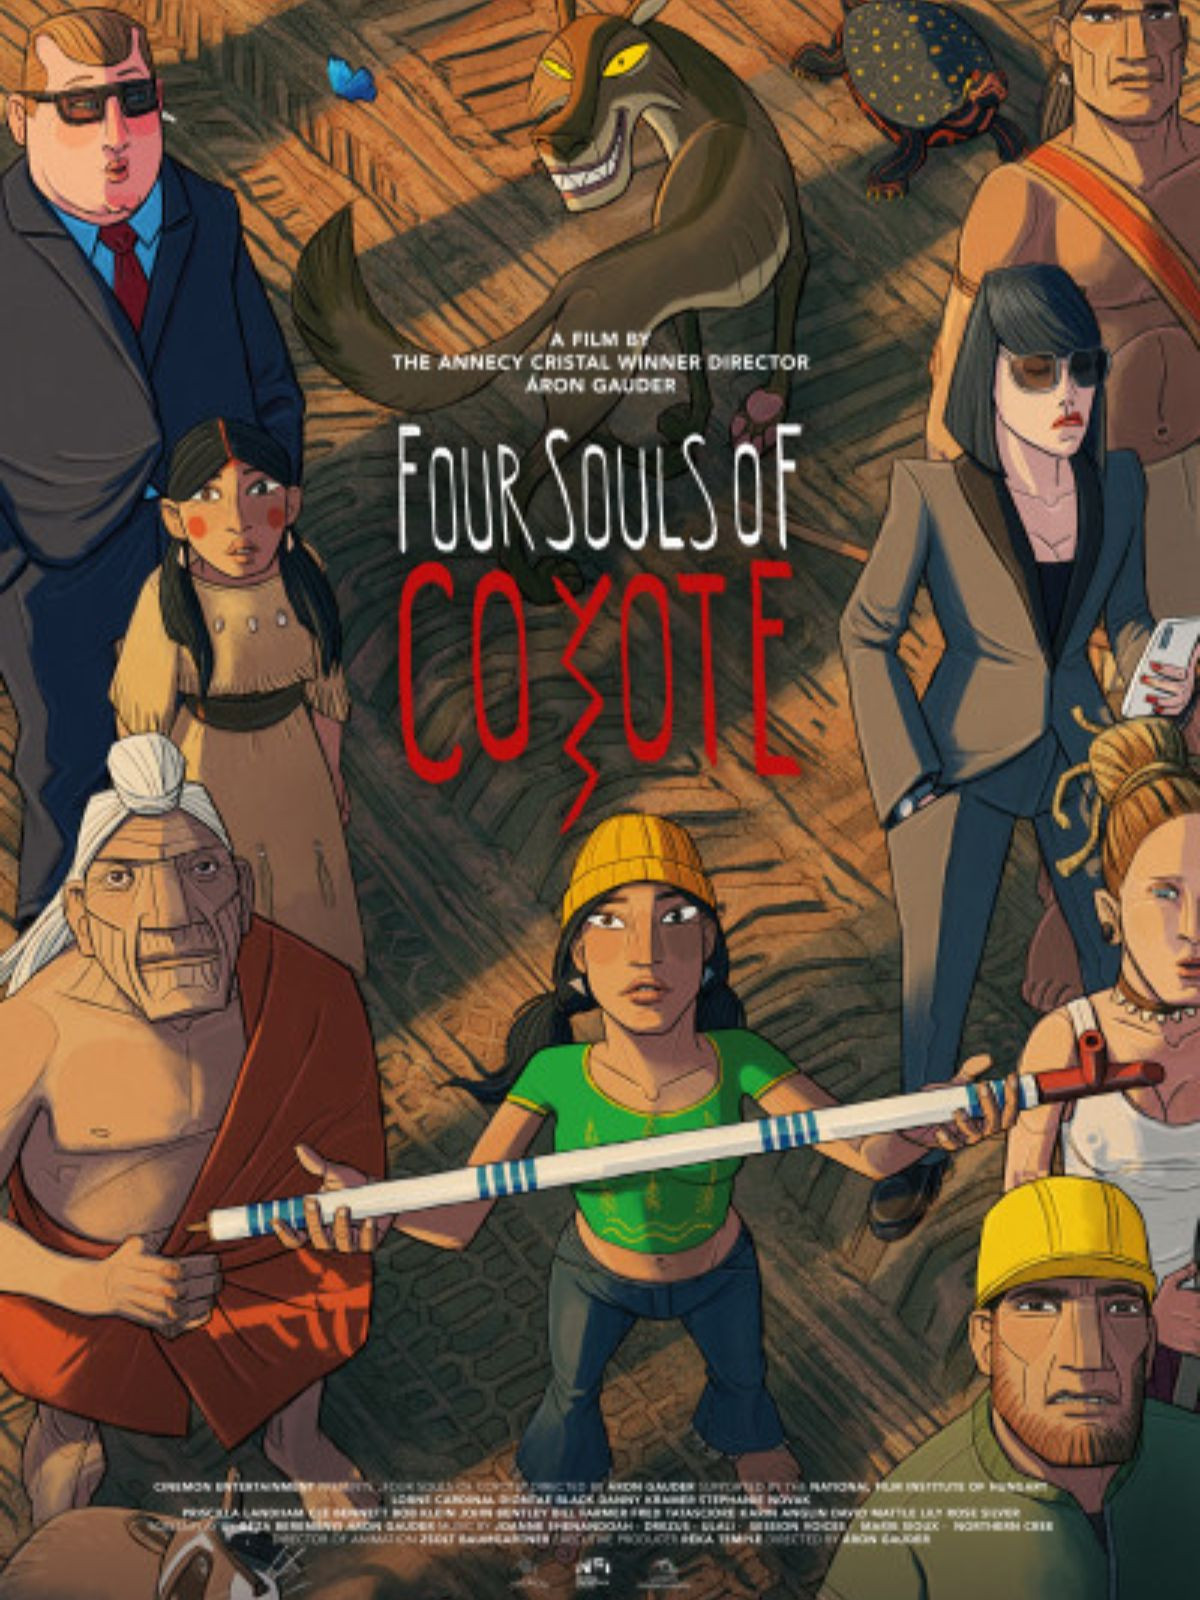 NFI - University Film Club: Four Souls of Coyote